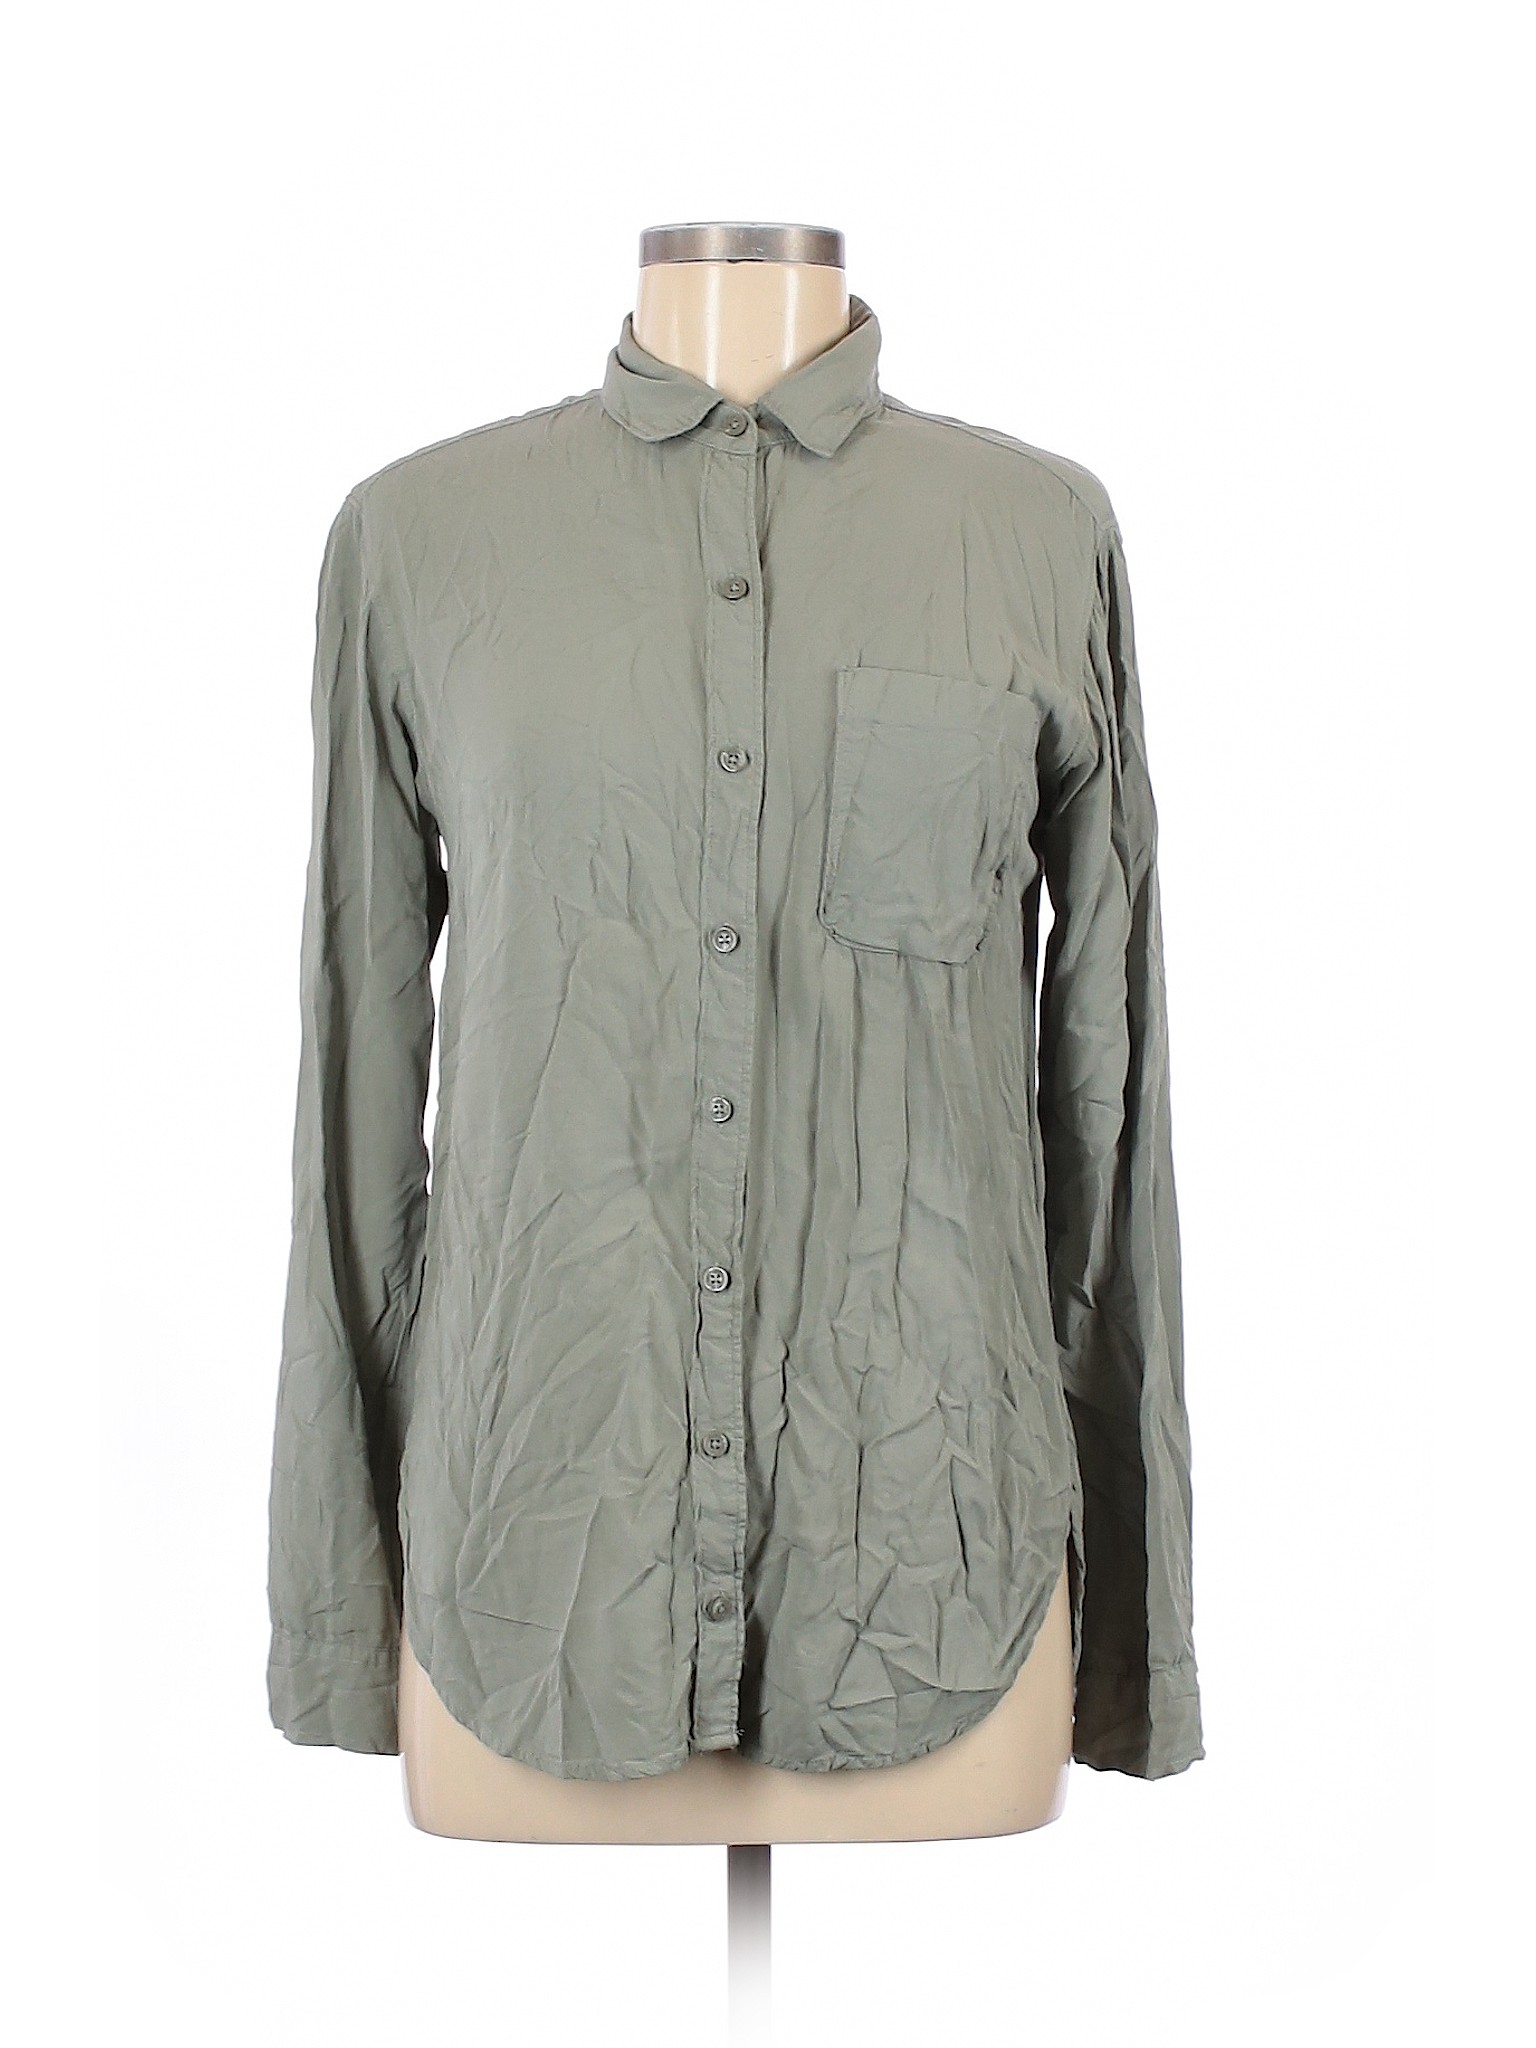 Abercrombie & Fitch Women Gray Long Sleeve Button-Down Shirt XS | eBay